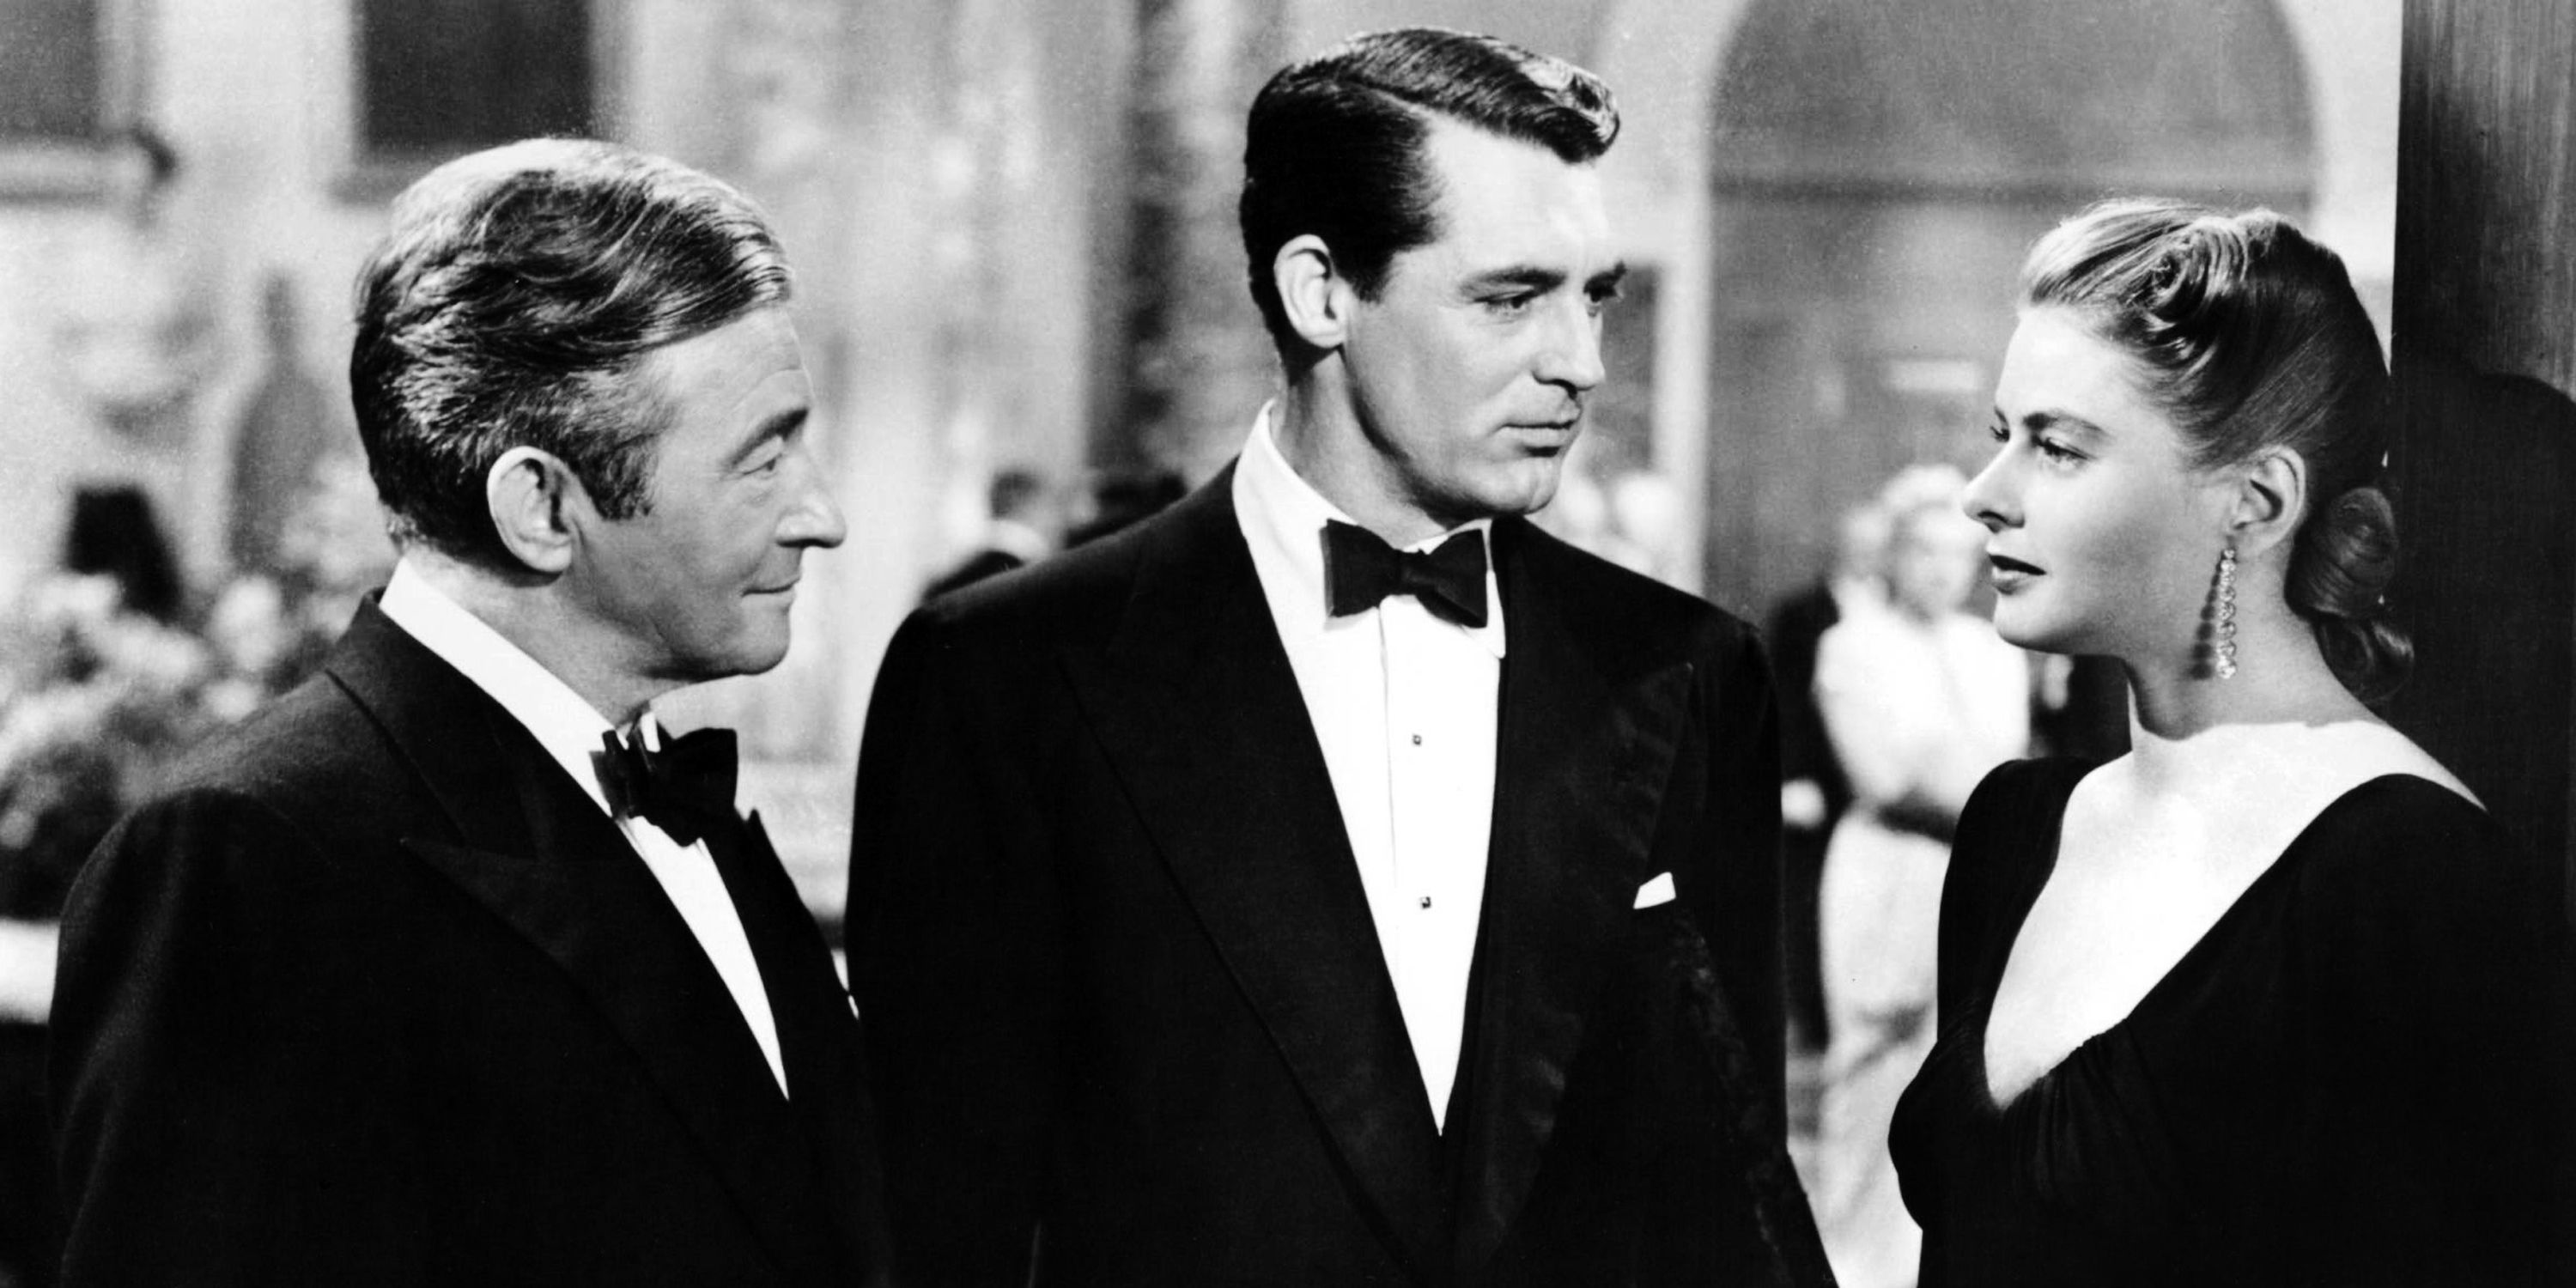 Claude Rains, Cary Grant, and Ingrid Bergman conversing in 'Notorious' 